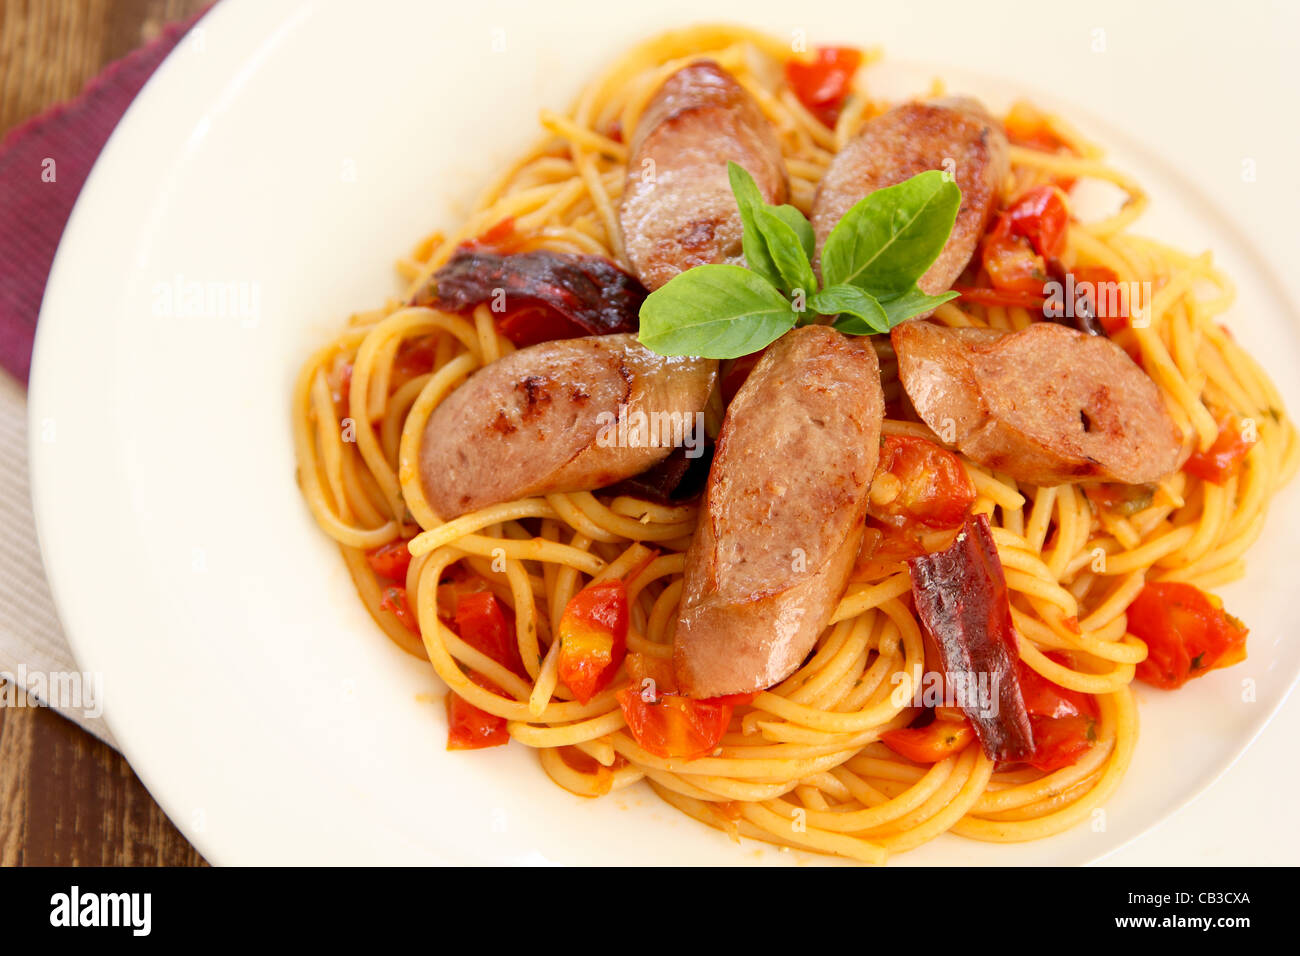 Pasta with sausage and tomato Stock Photo